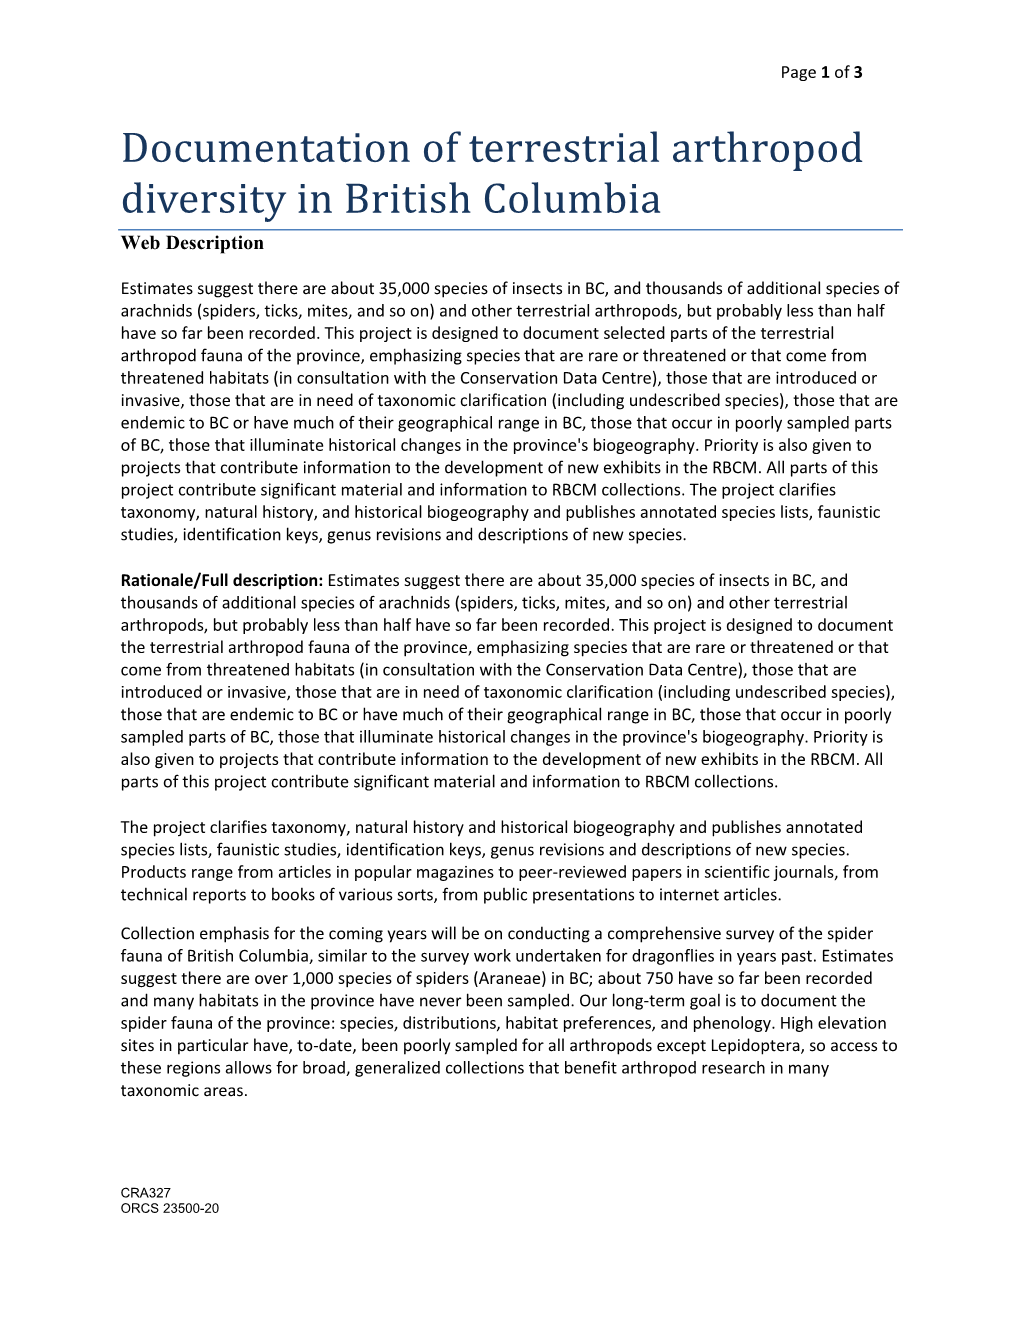 Documentation of Terrestrial Arthropod Diversity in British Columbia Web Description